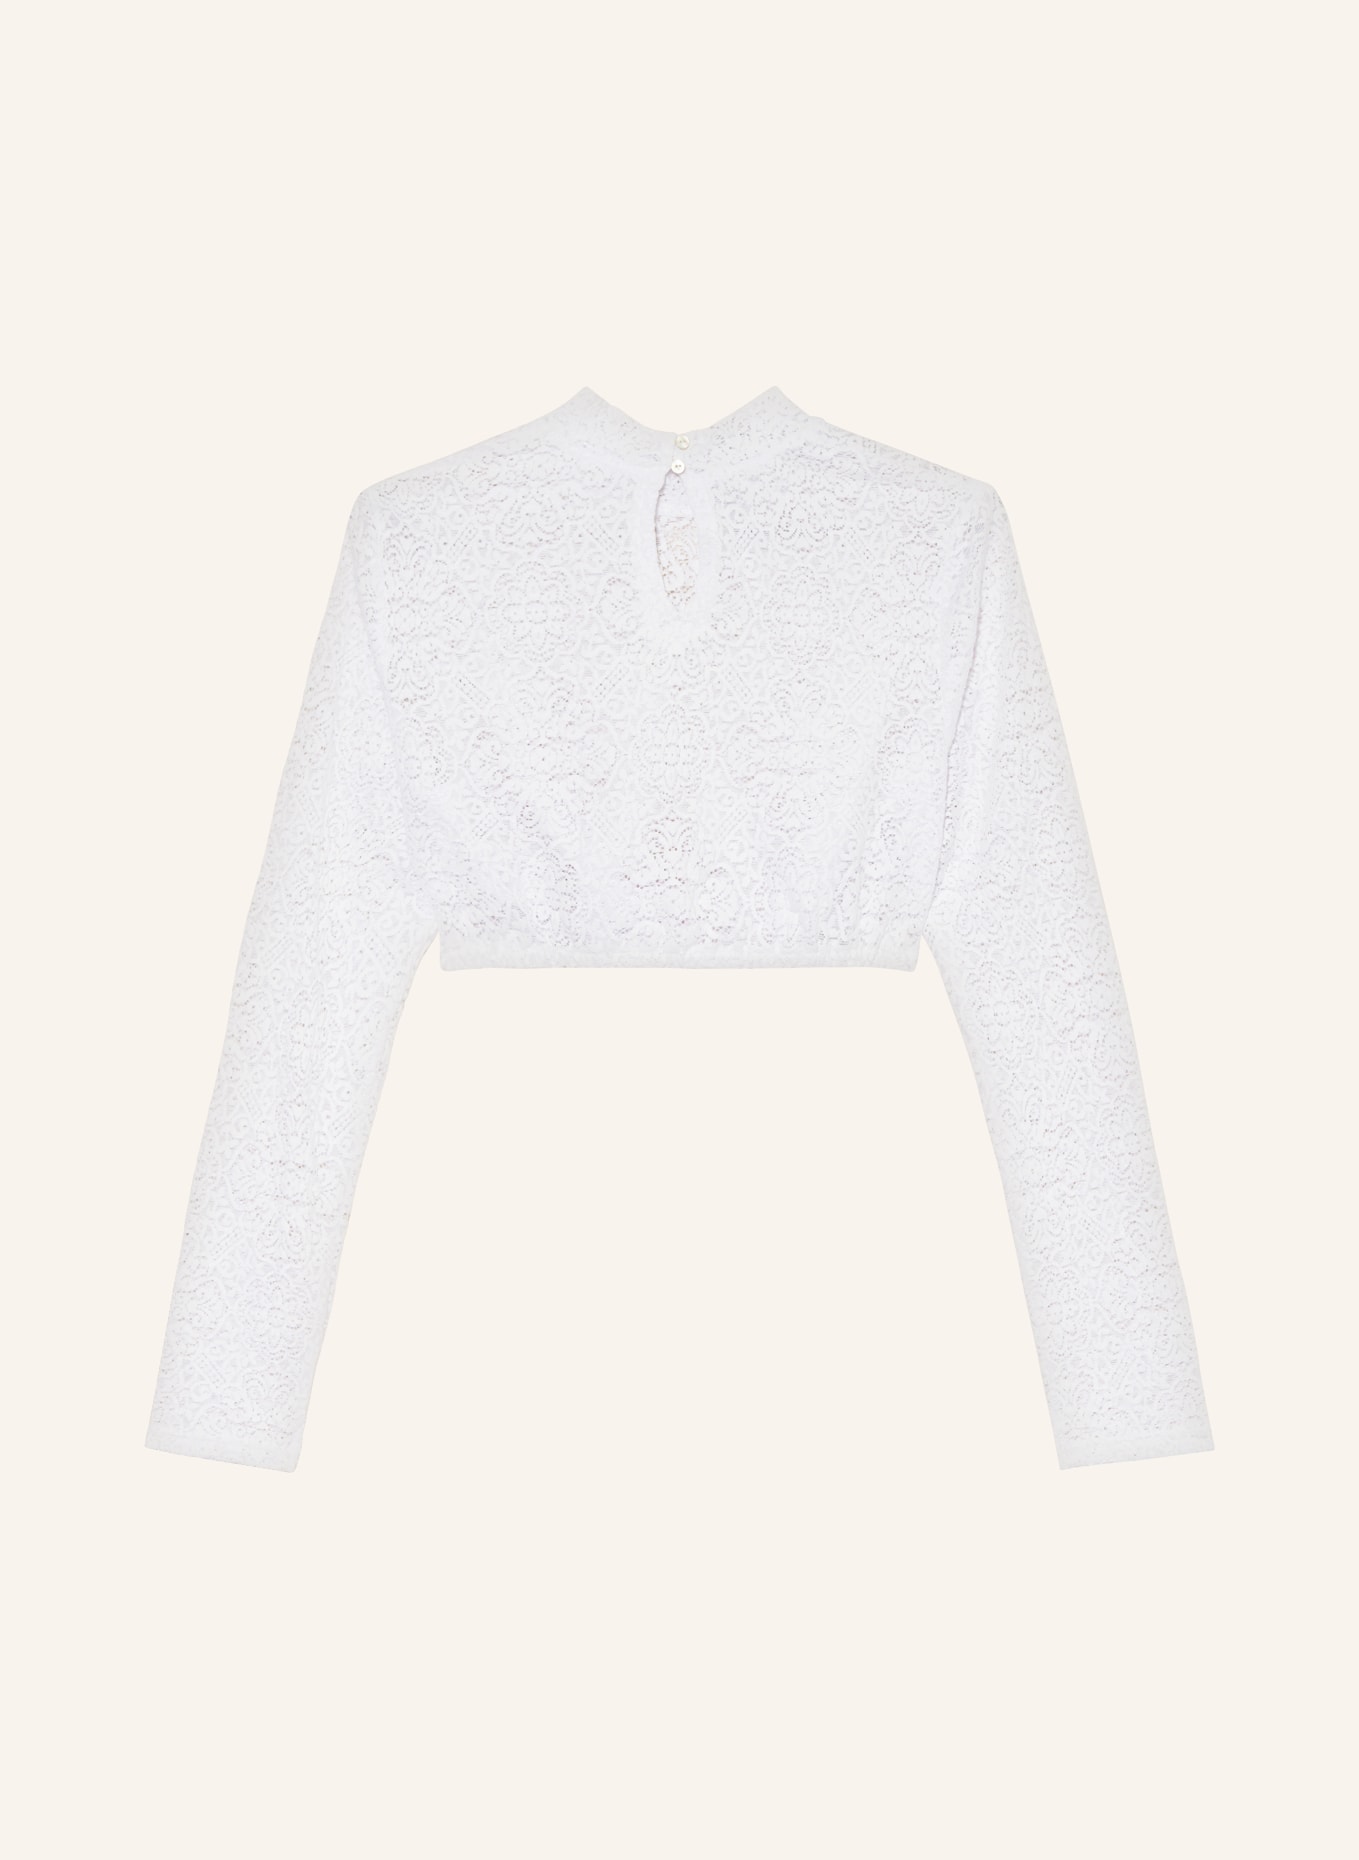 Johann & Johanna Dirndl blouse made of lace, Color: WHITE (Image 2)